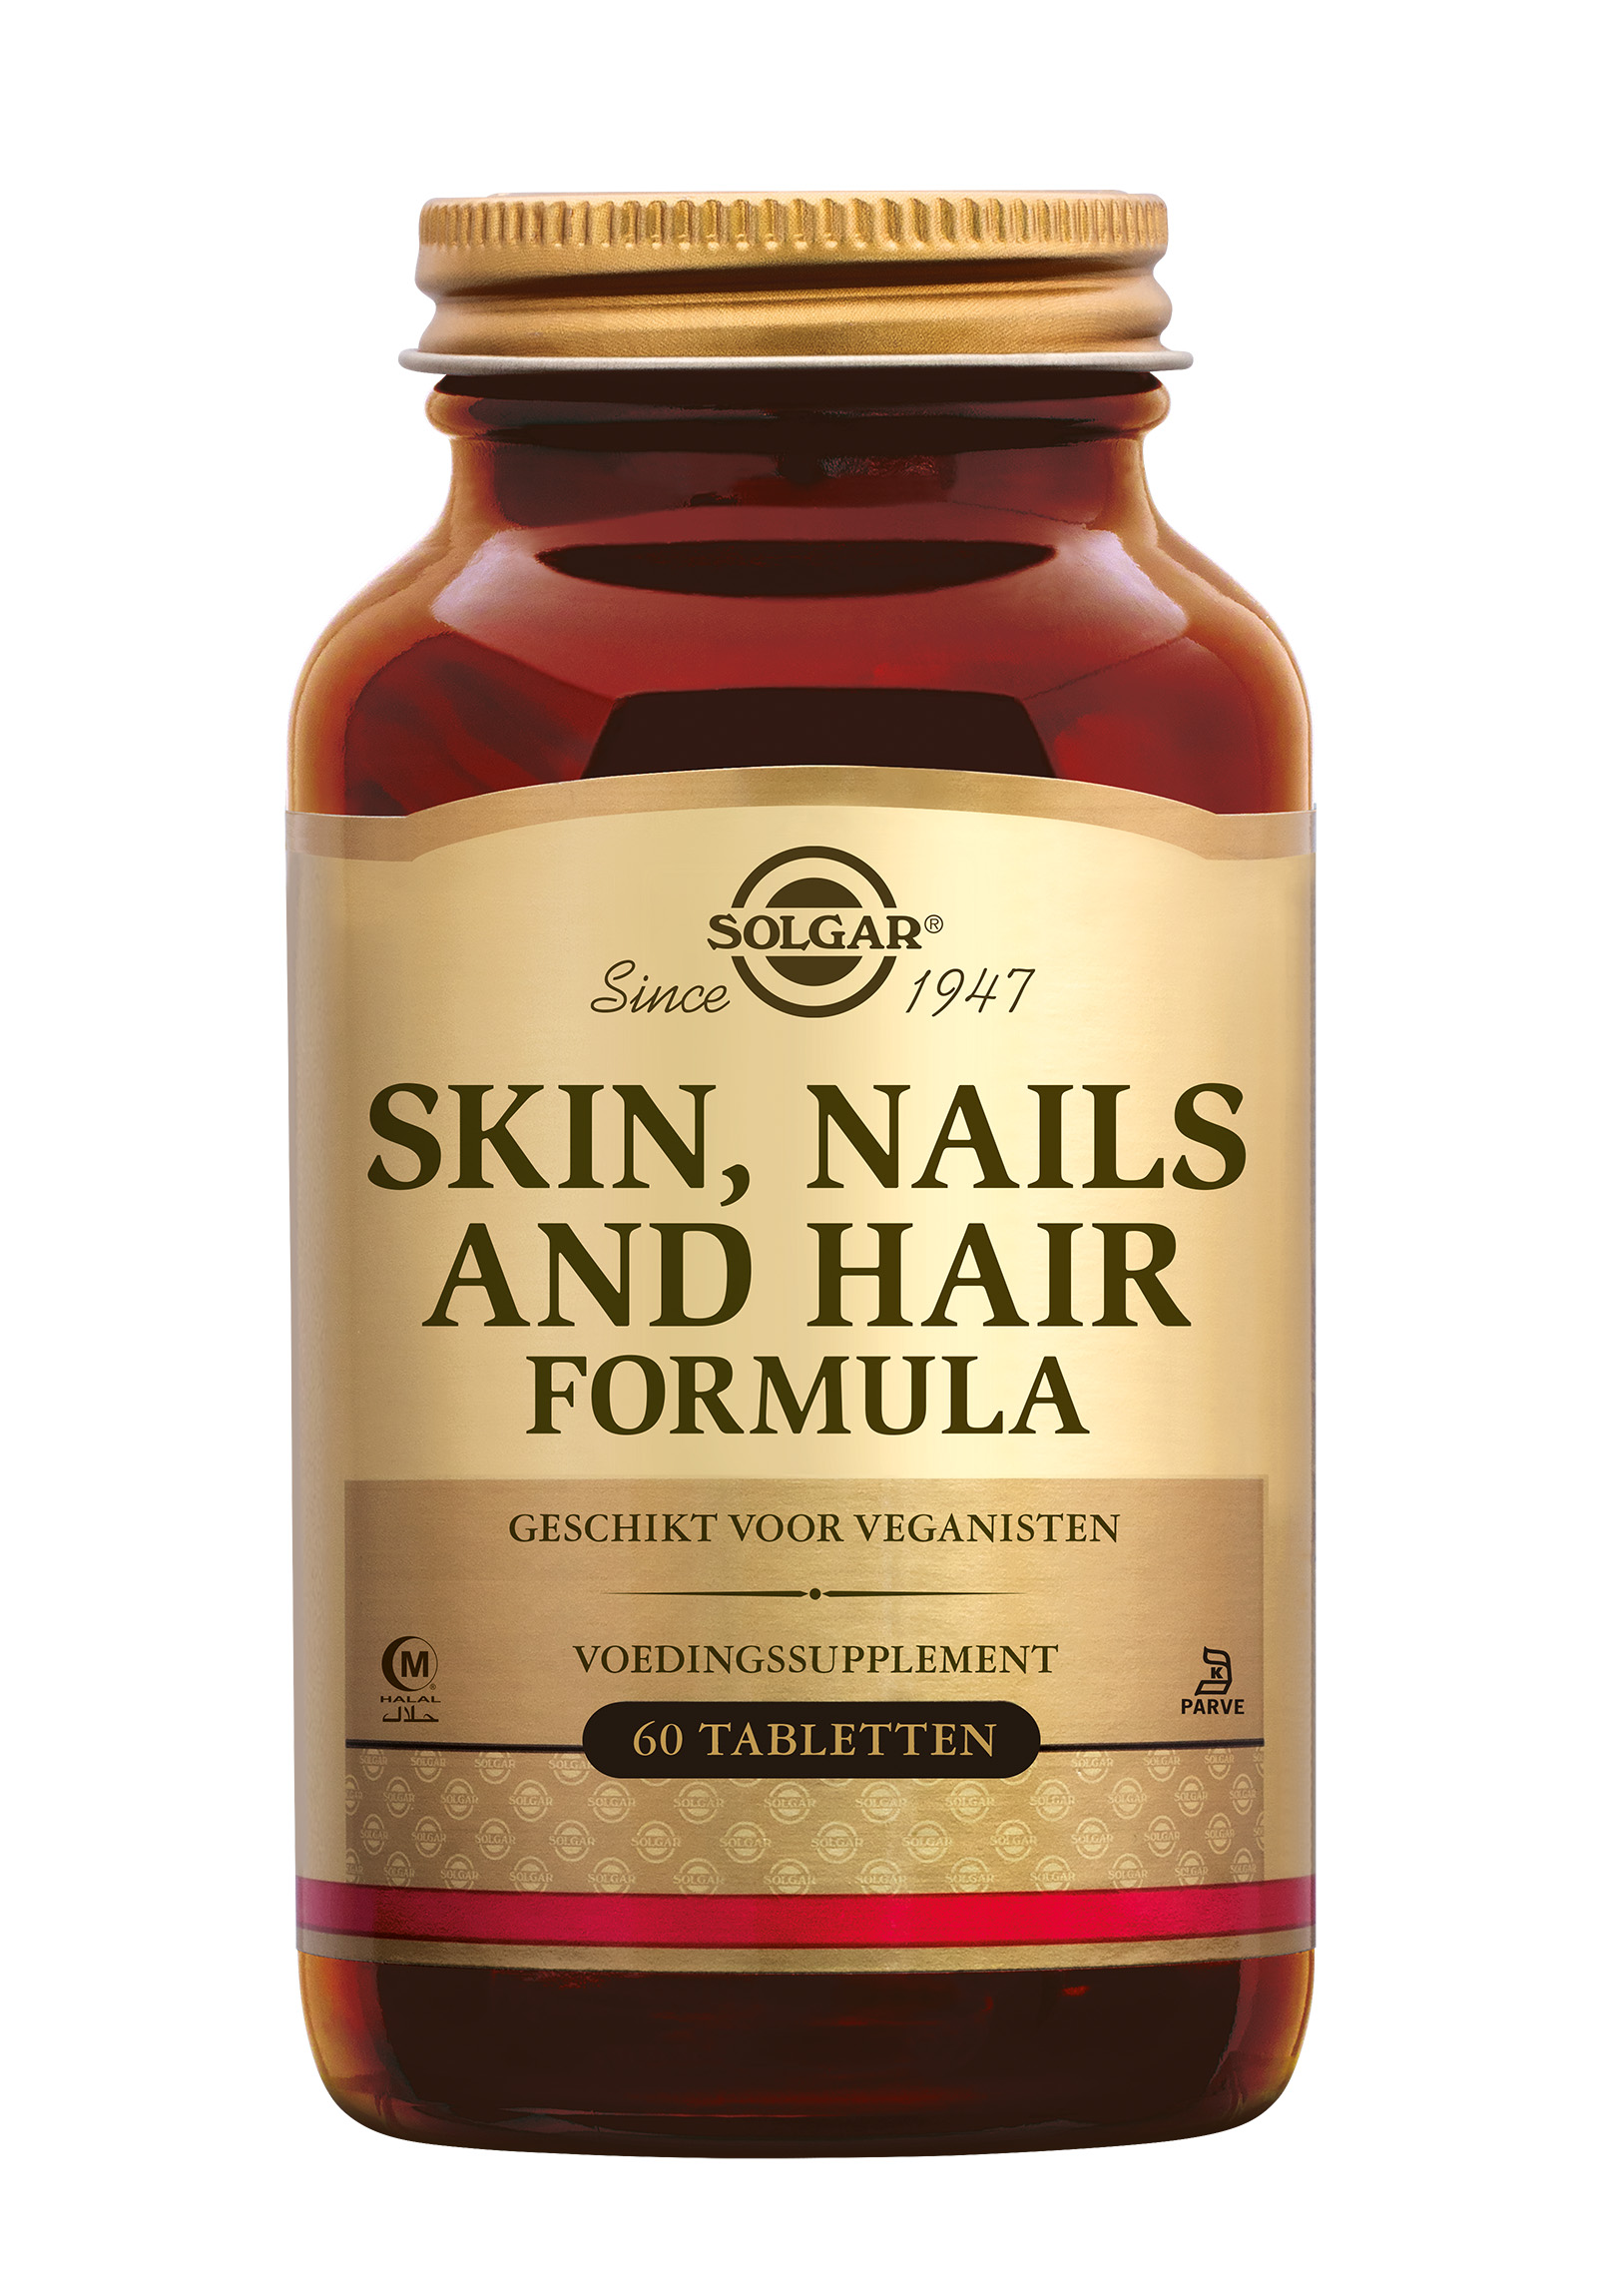 Solgar Skin, Nails and Hair Formula (60 stuks)